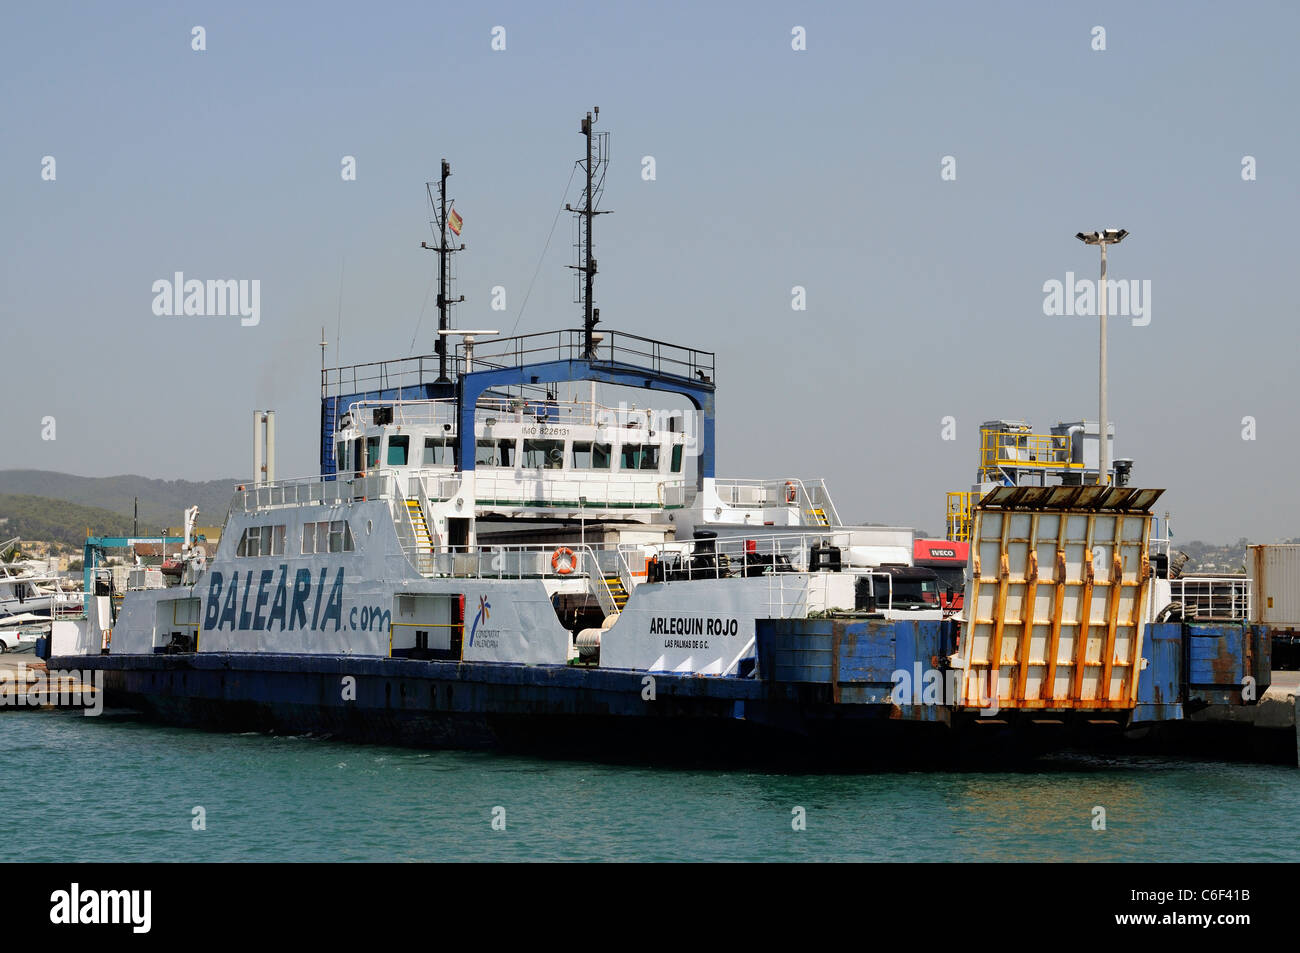 Inter island ferry Arlequin ROJO alongside in Eivissa Port Ibiza a Spanish Island Stock Photo